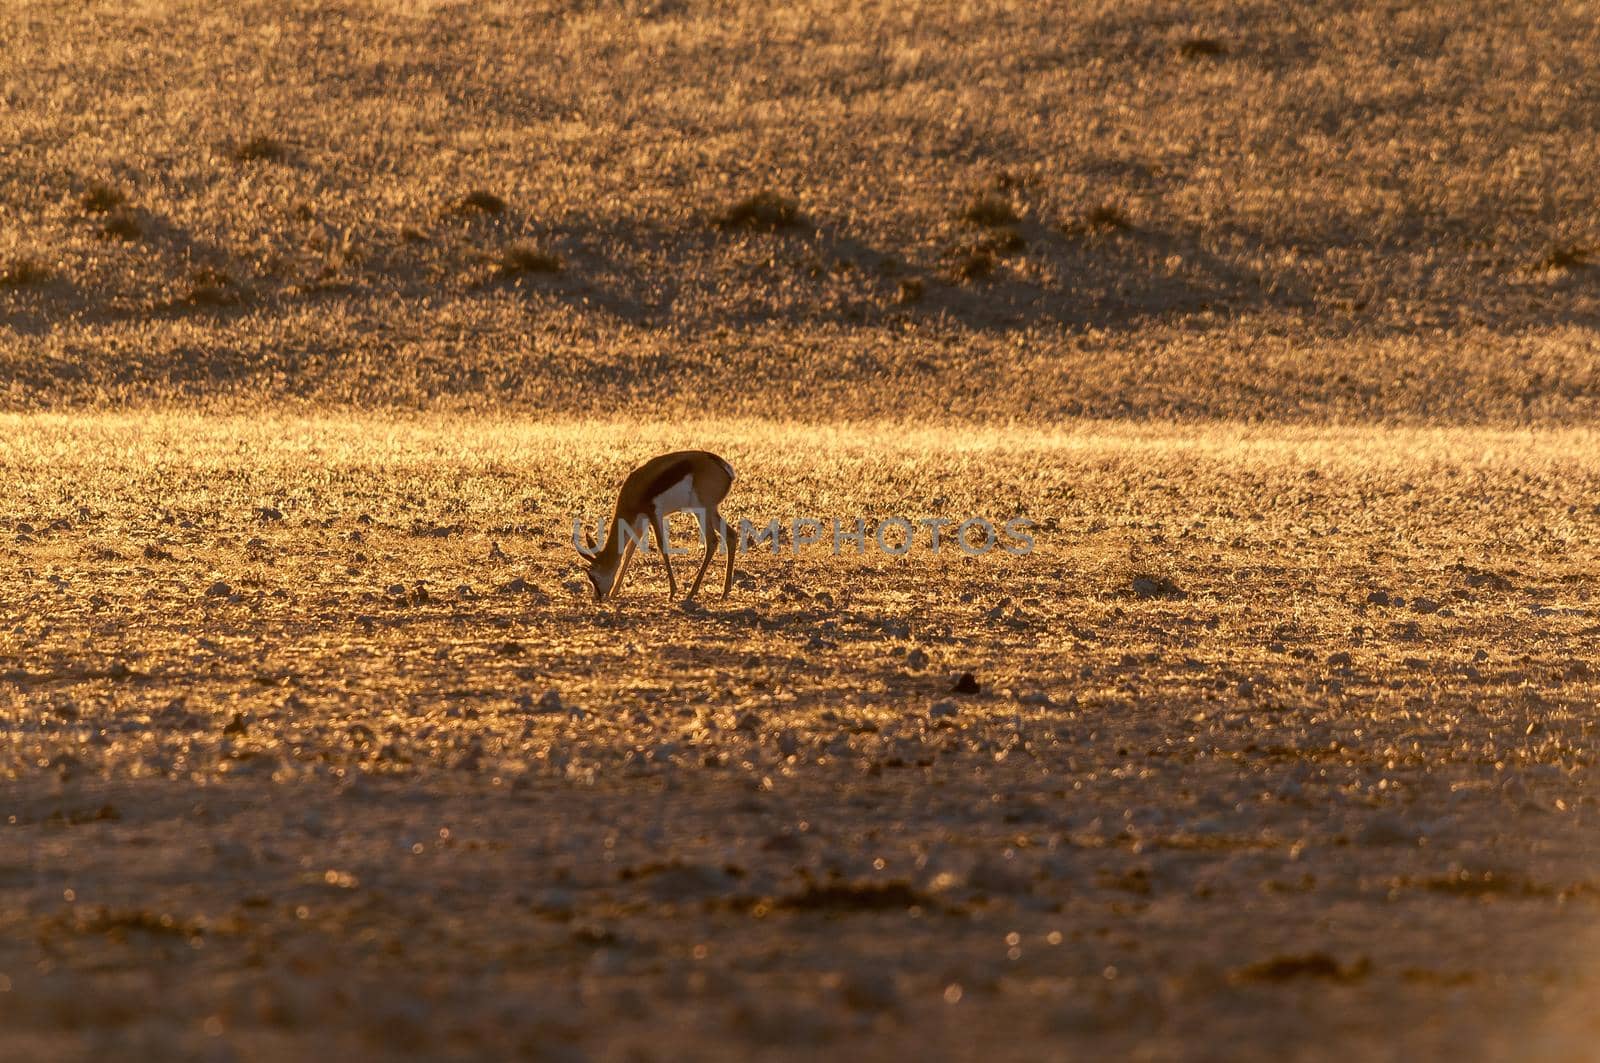 Springbok grazing at Garub near Aus in Namibia by dpreezg